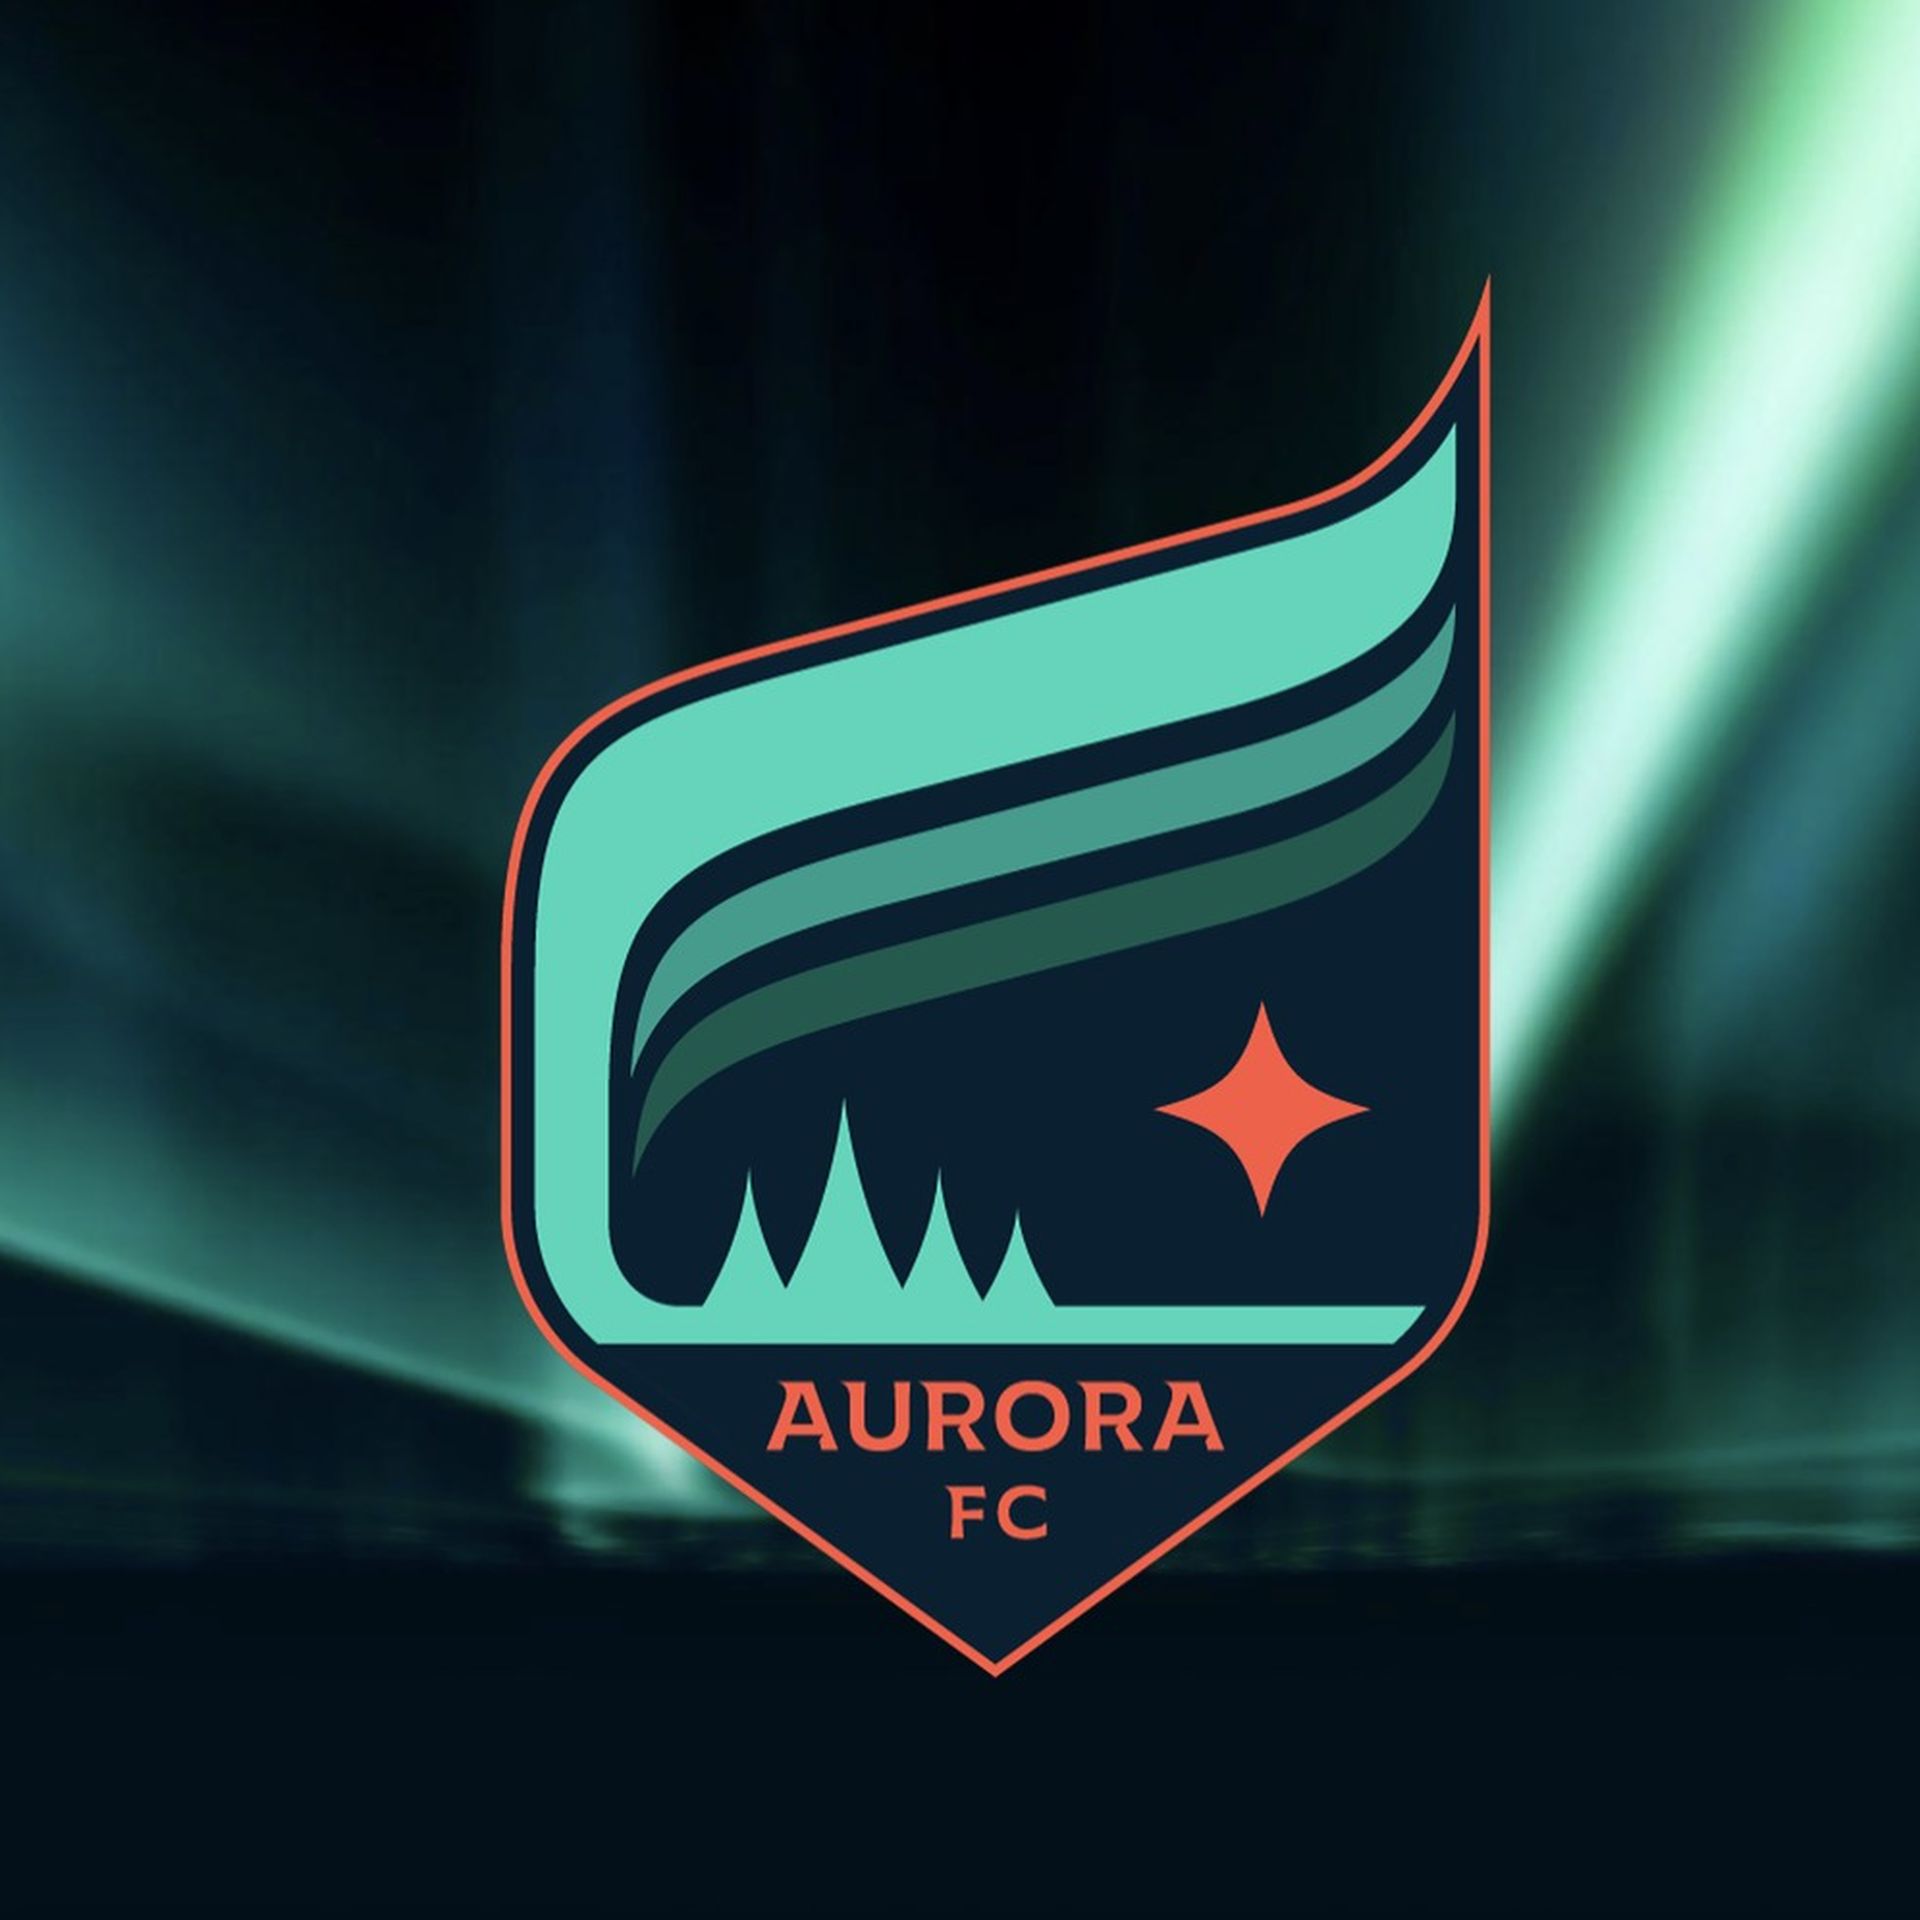 The Minnesota Aurora logo.